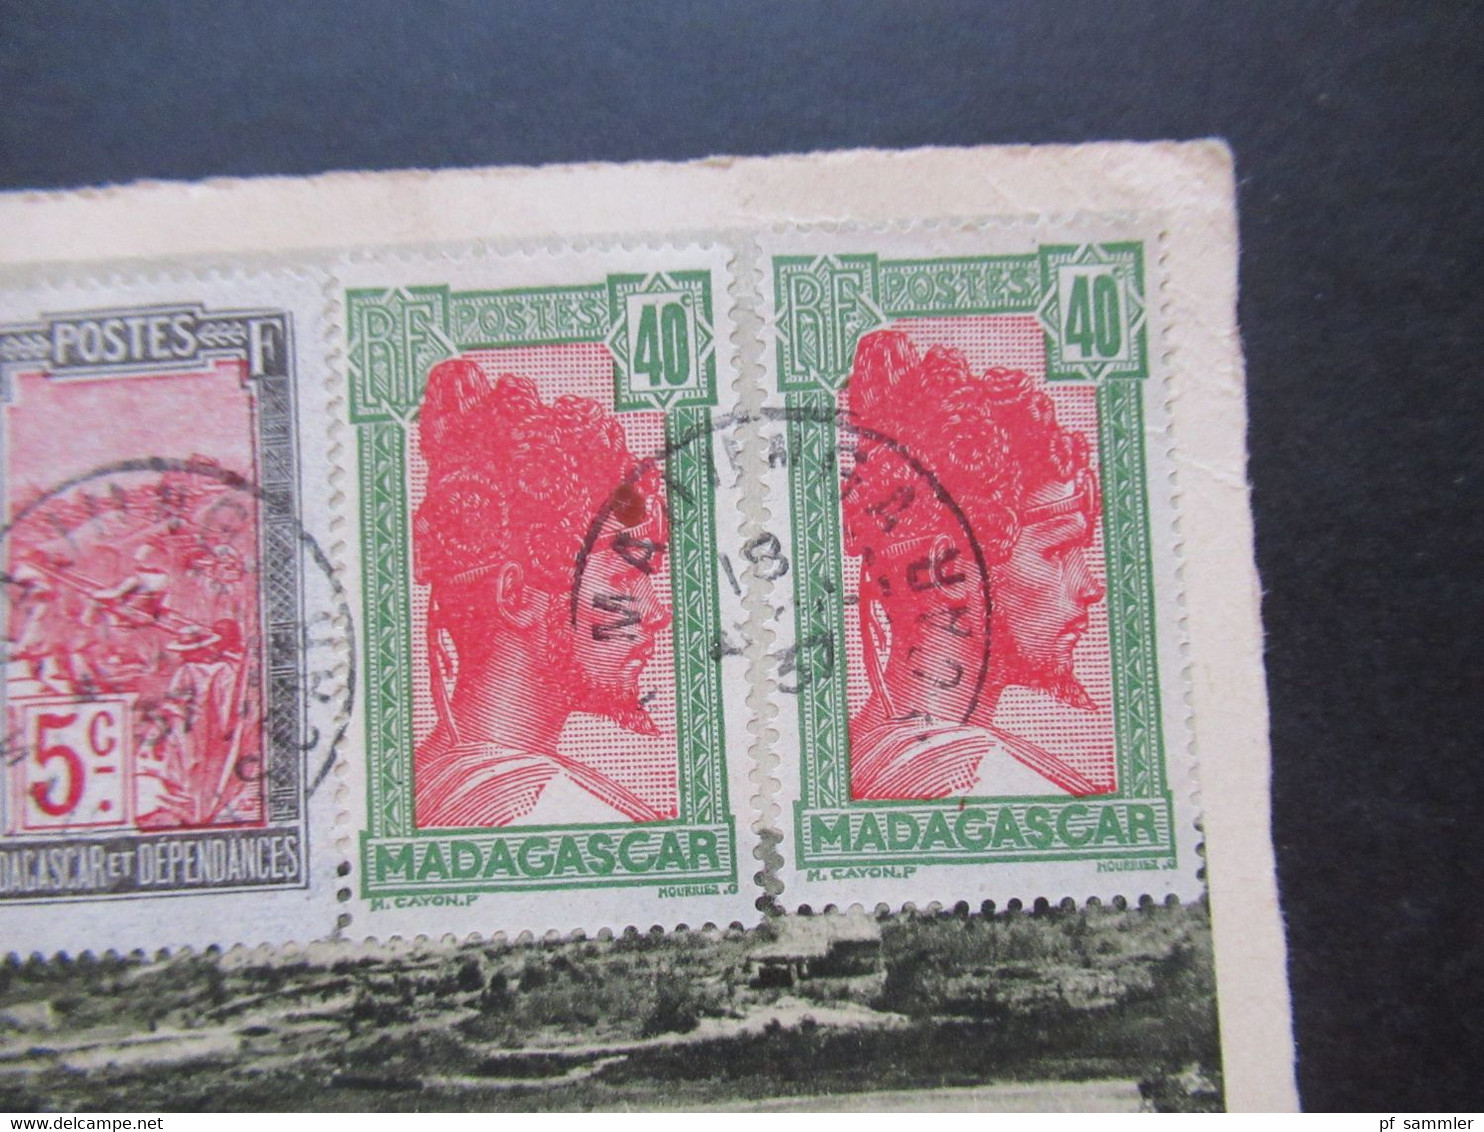 AK 1937 Madagaskar Majunga La Digue Metzinger Bildseitig Frankiert Madagascar Et Dependances PK Nach Hildesheim - Lettres & Documents